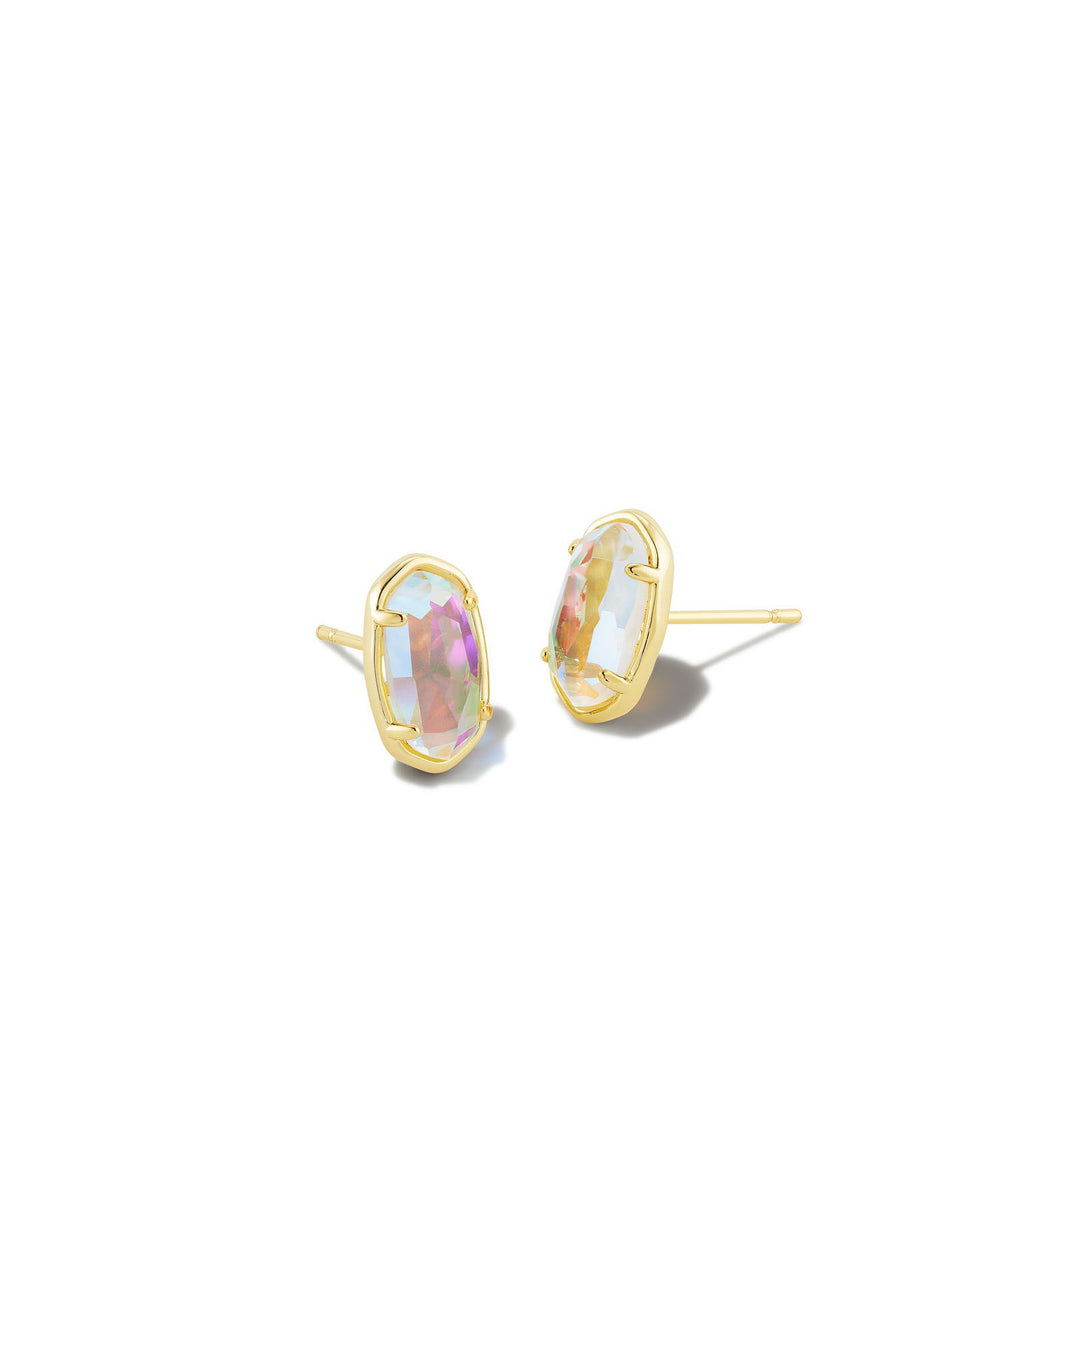 Kendra Scott Grayson Stud Earrings in Gold Dichroic Glass